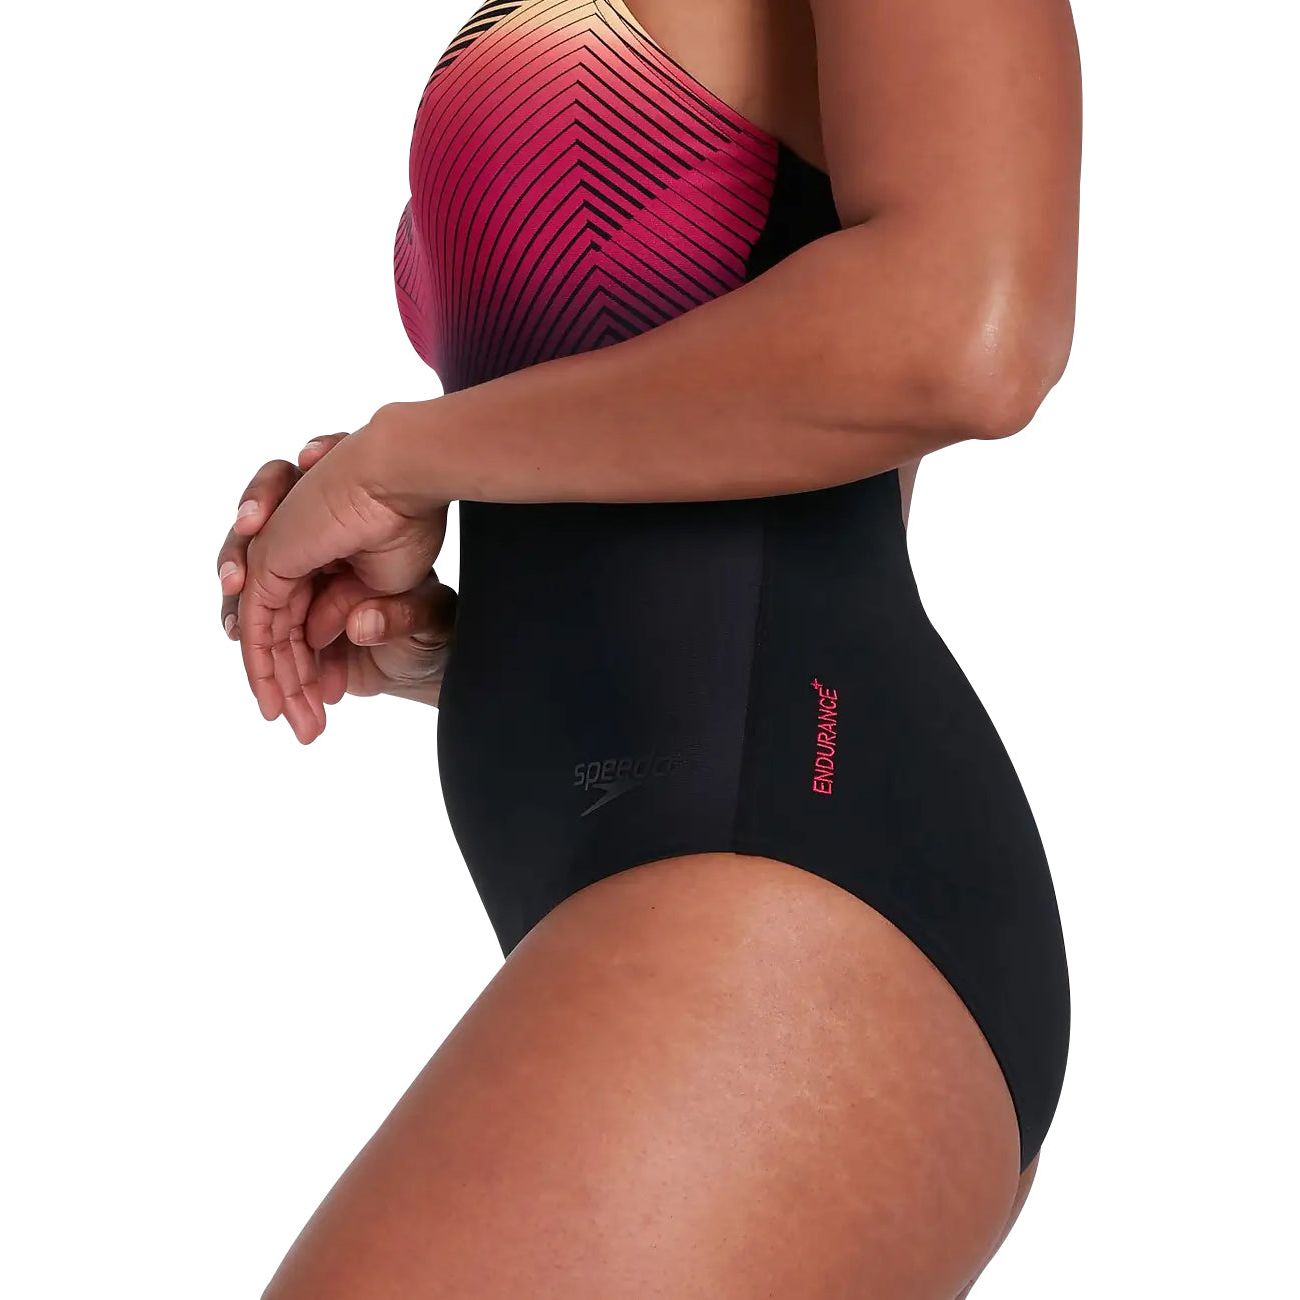 Speedo Digital Placement Medalist Swimsuit  Details